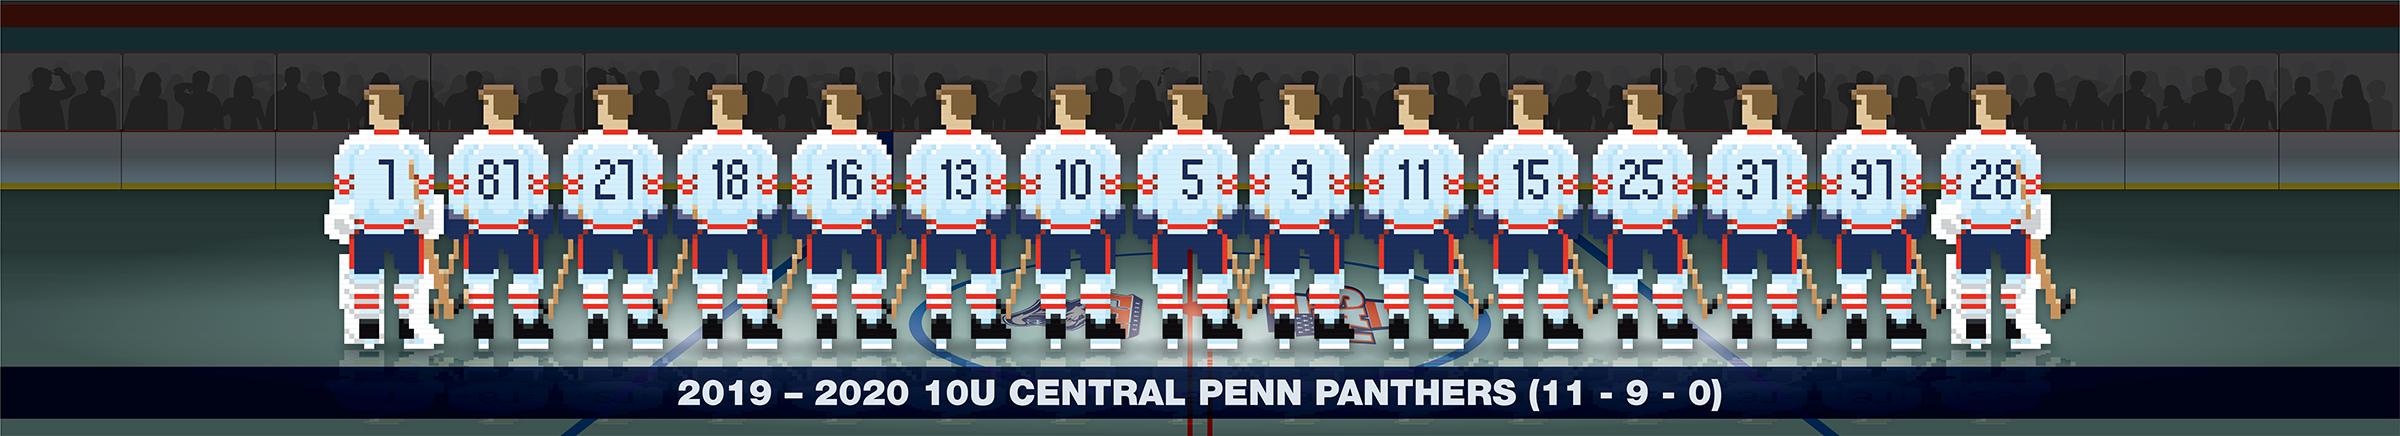 2019 – 20 Central Penn Panthers 10U